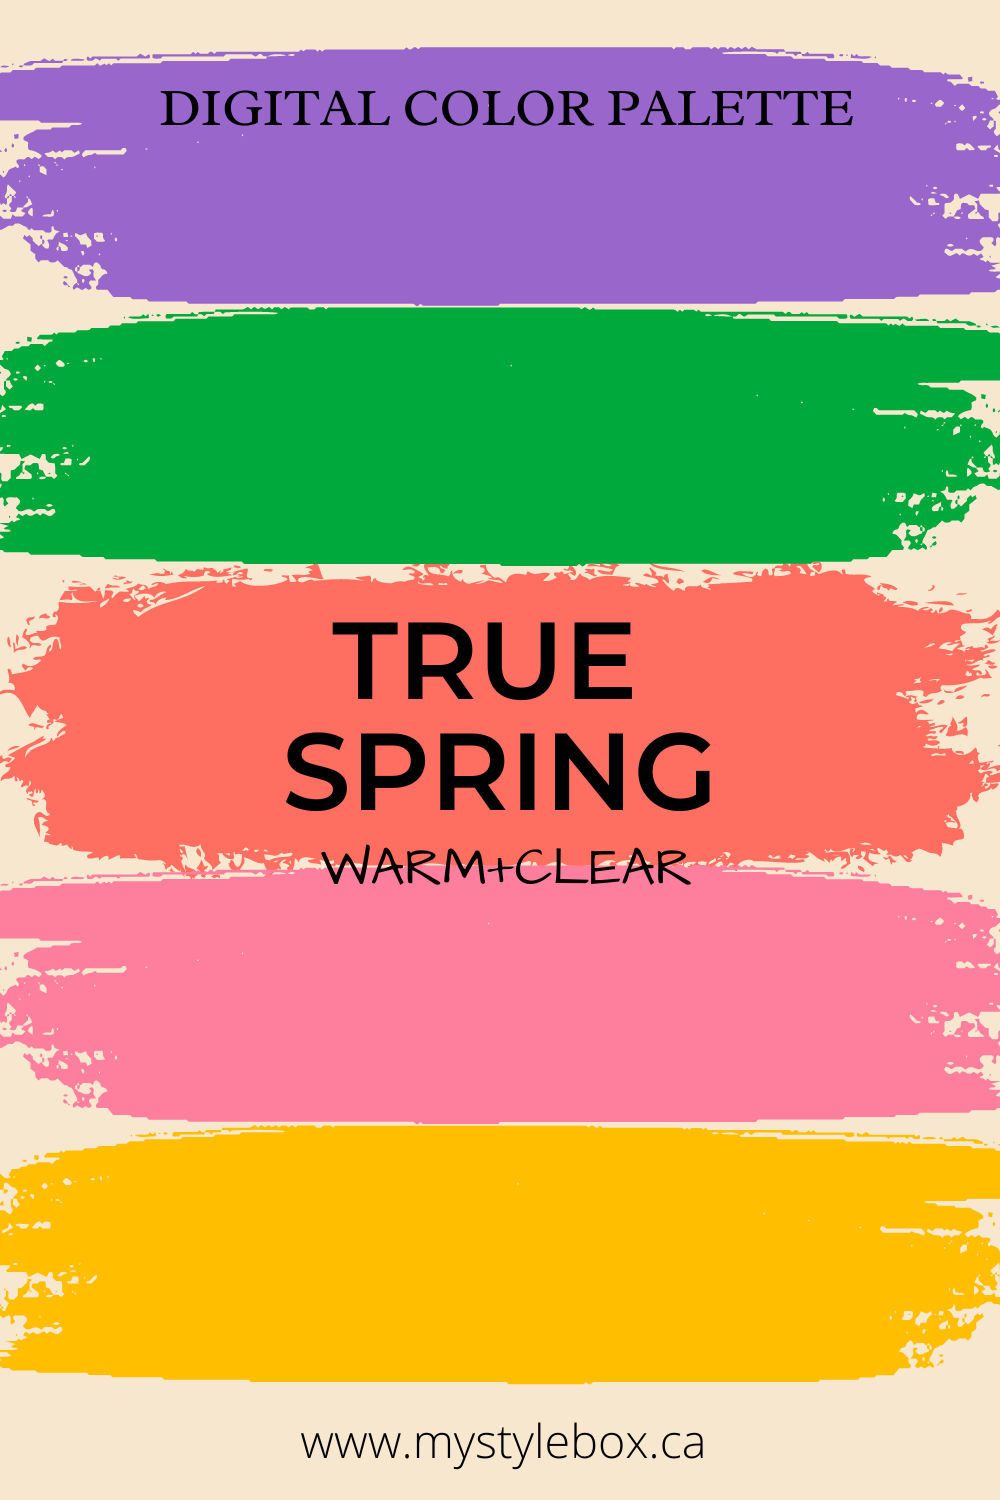 True (Warm) Spring Season Color Palette